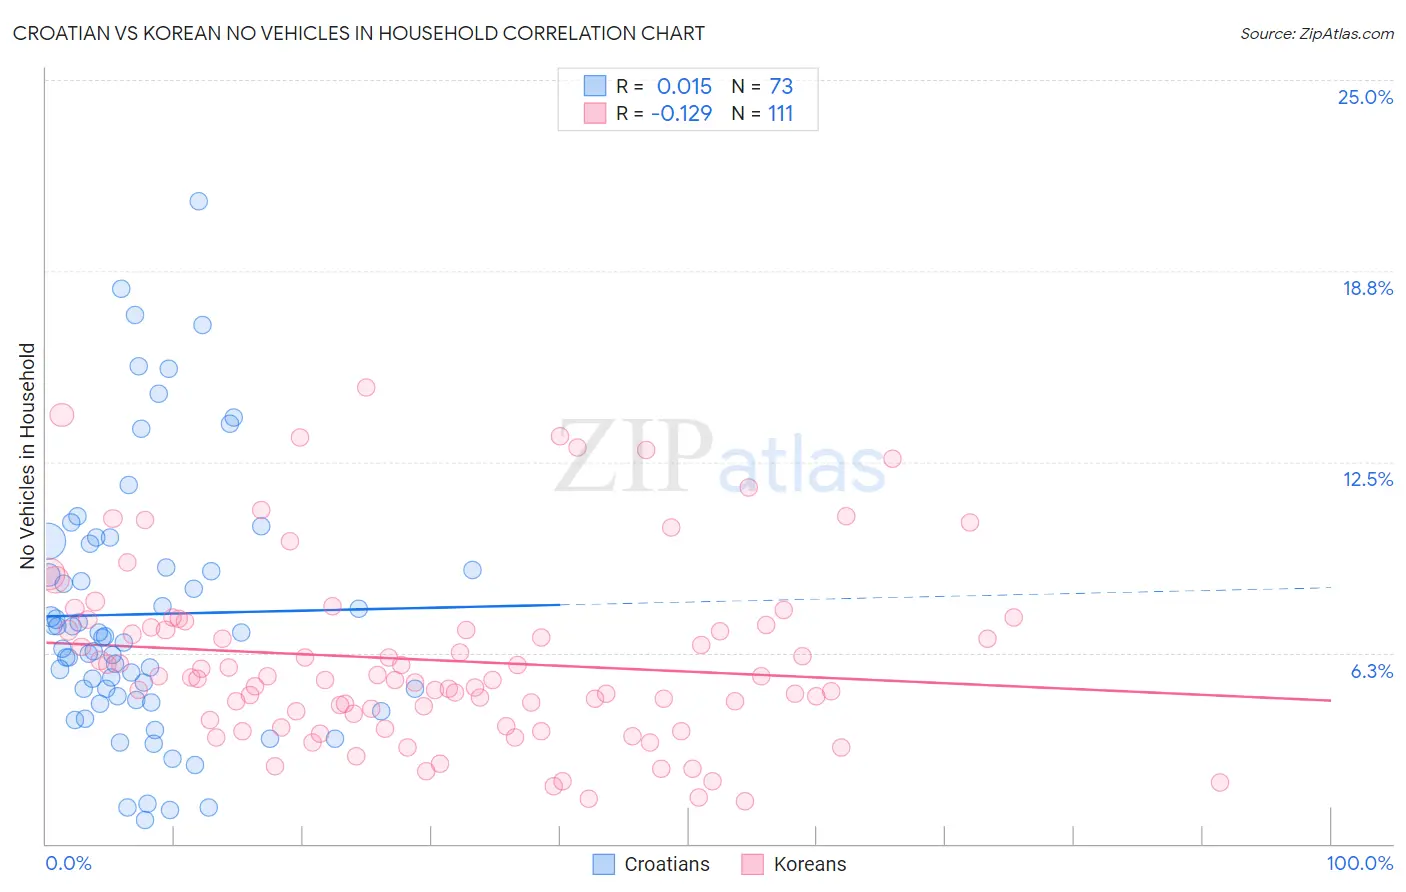 Croatian vs Korean No Vehicles in Household